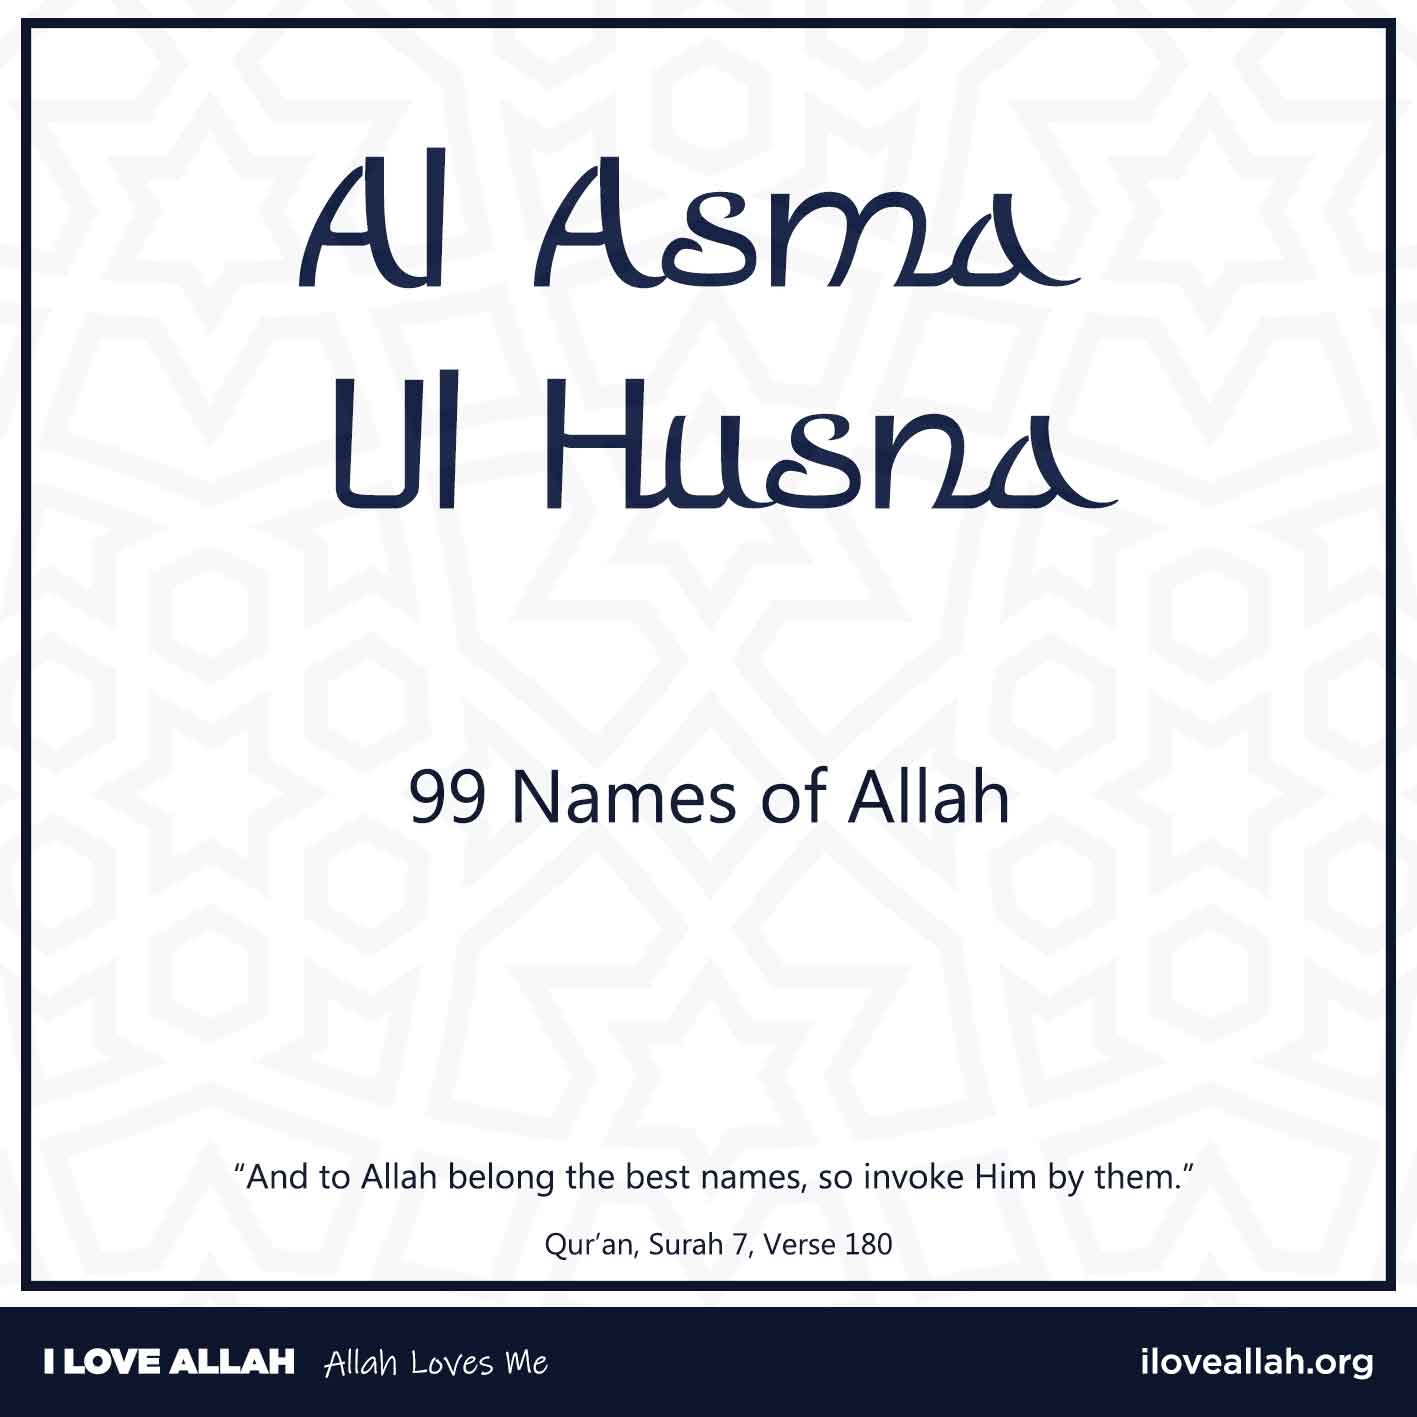 99 Names of Allah - Al Asma Ul Husna - I Love Allah - Allah Loves Me - iloveallah.org